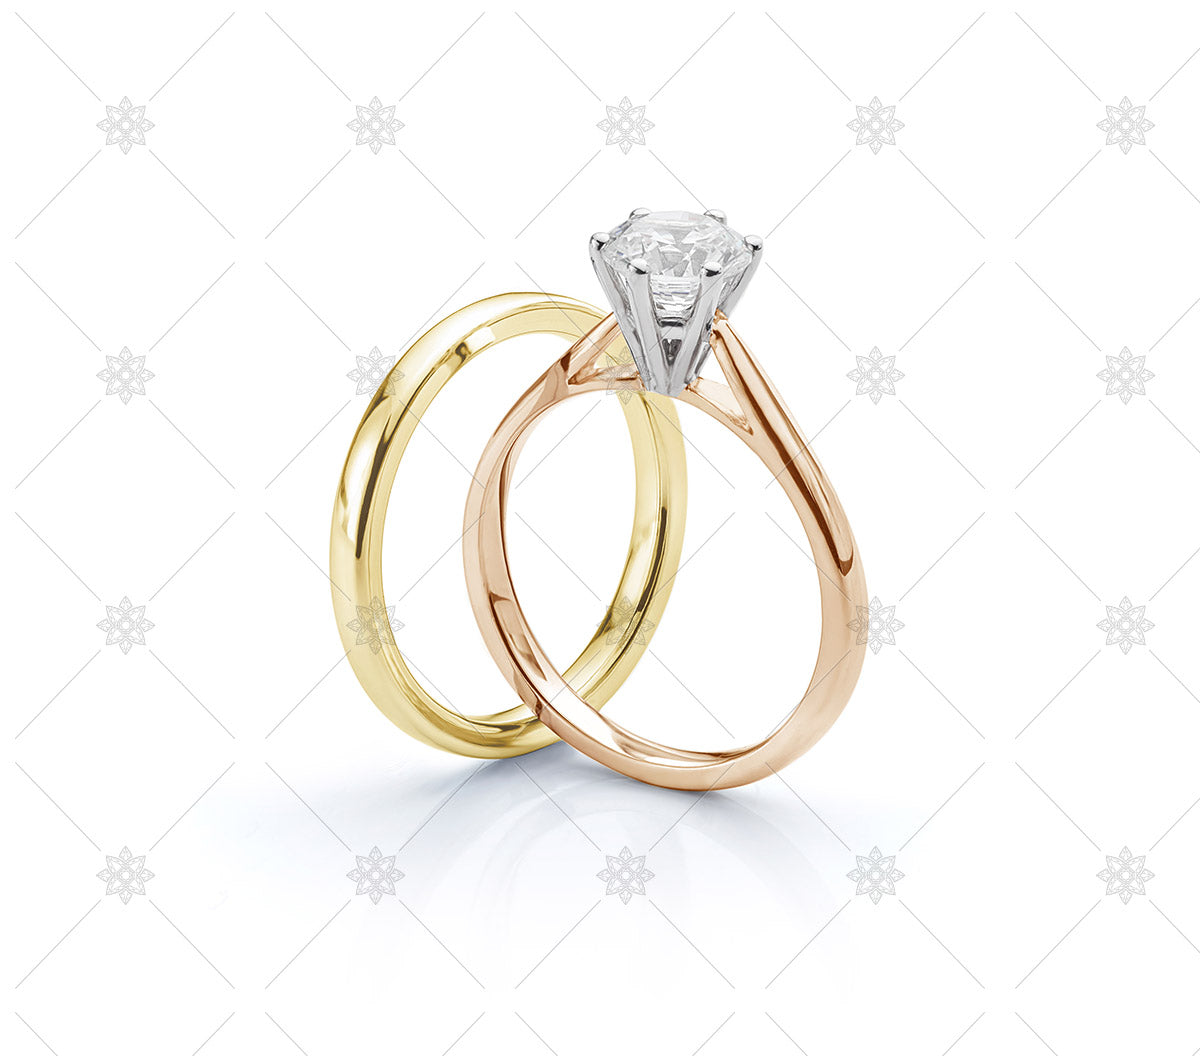 Yellow Gold Wedding Ring and Rose Gold Engagement Ring Set - JG4006